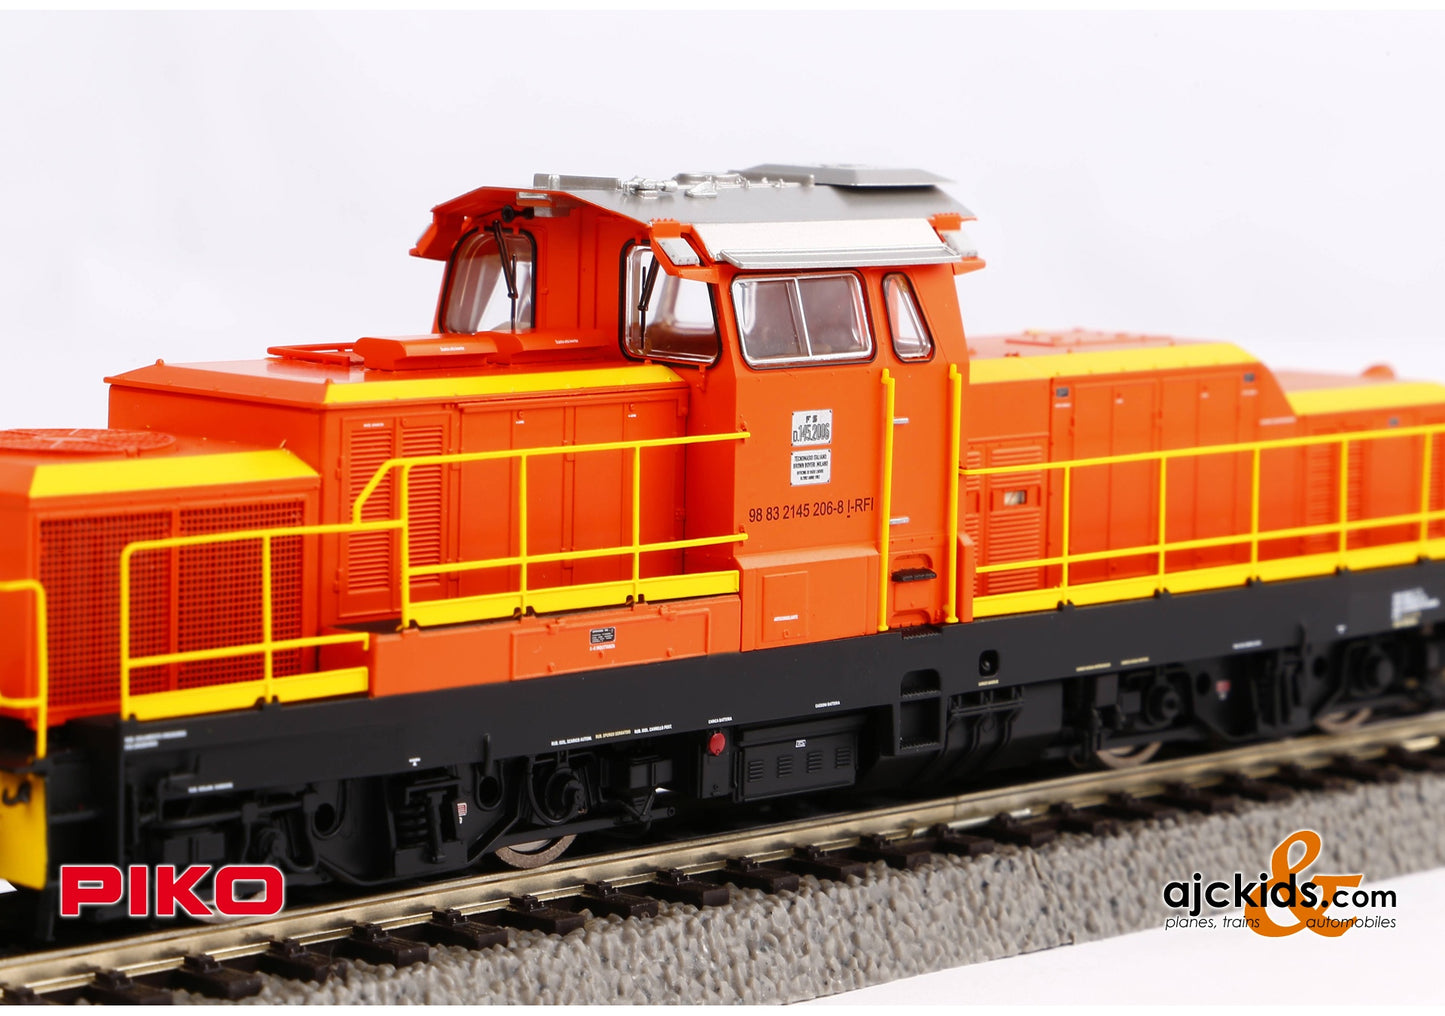 Piko 52856 - D.145.2028 Diesel Locomotive FS VI